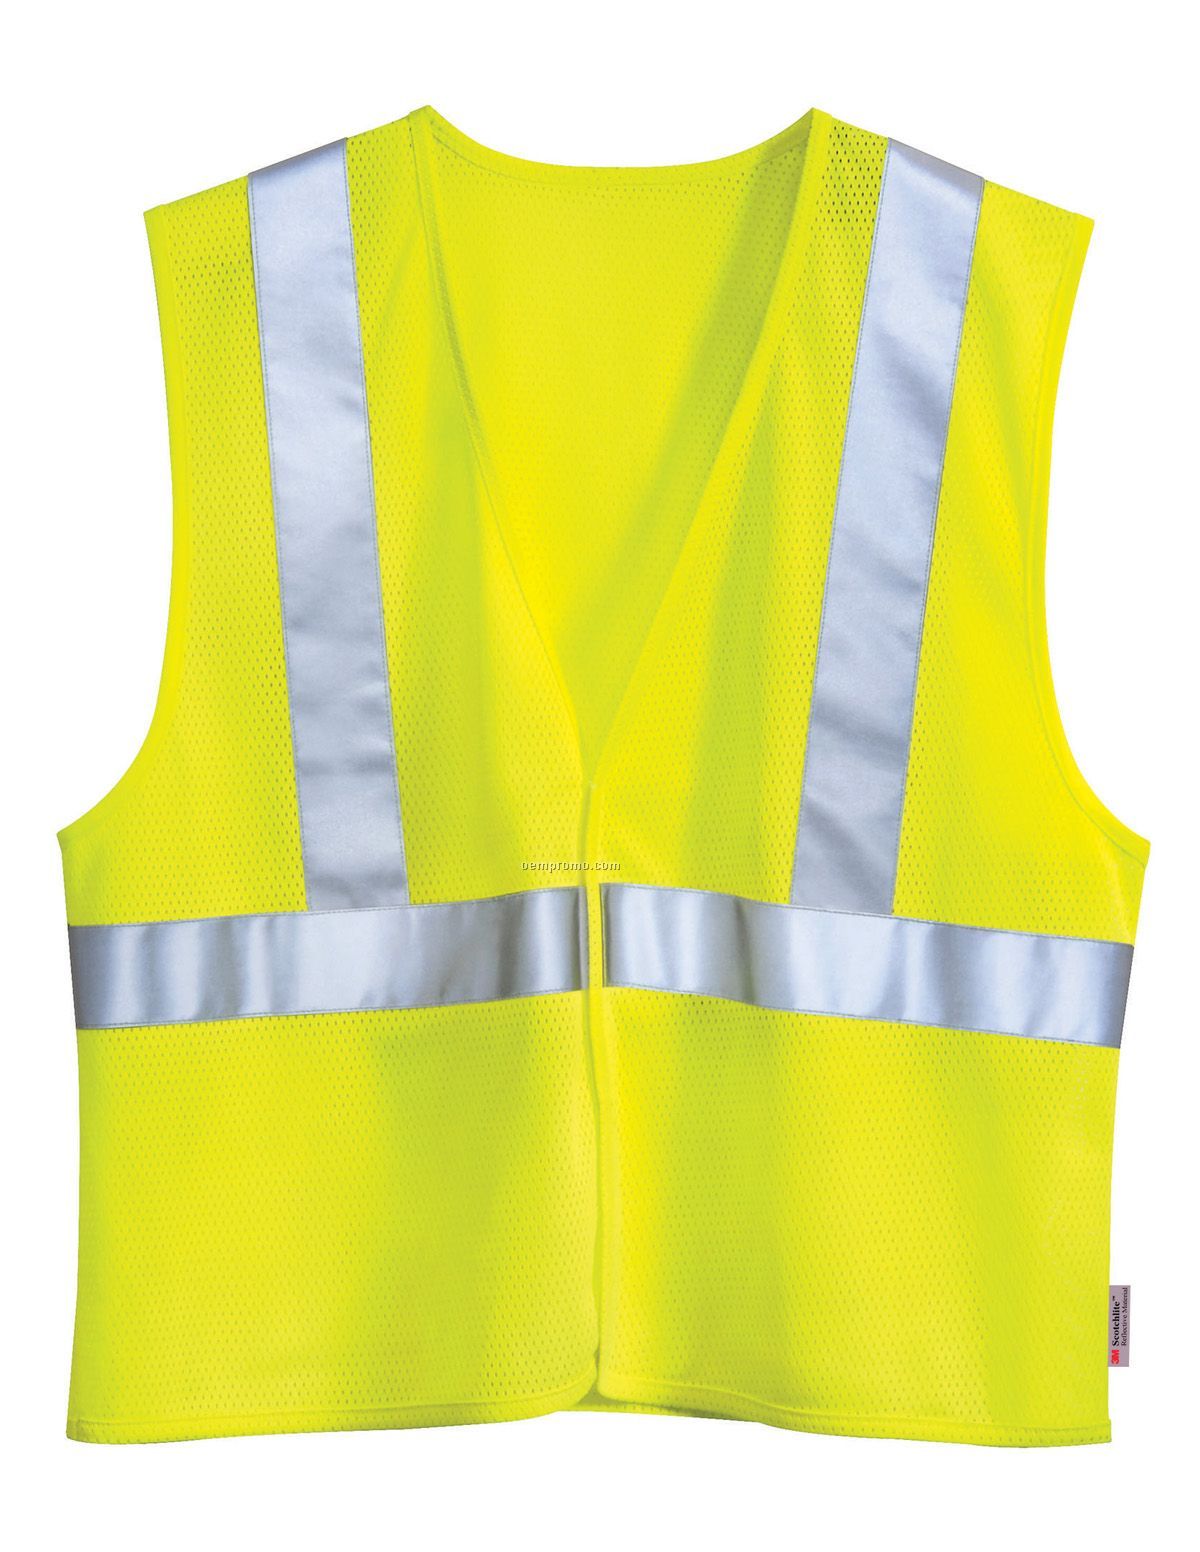 New Zone 100% Polyester Mesh Safety Vest 3m Reflective Tape